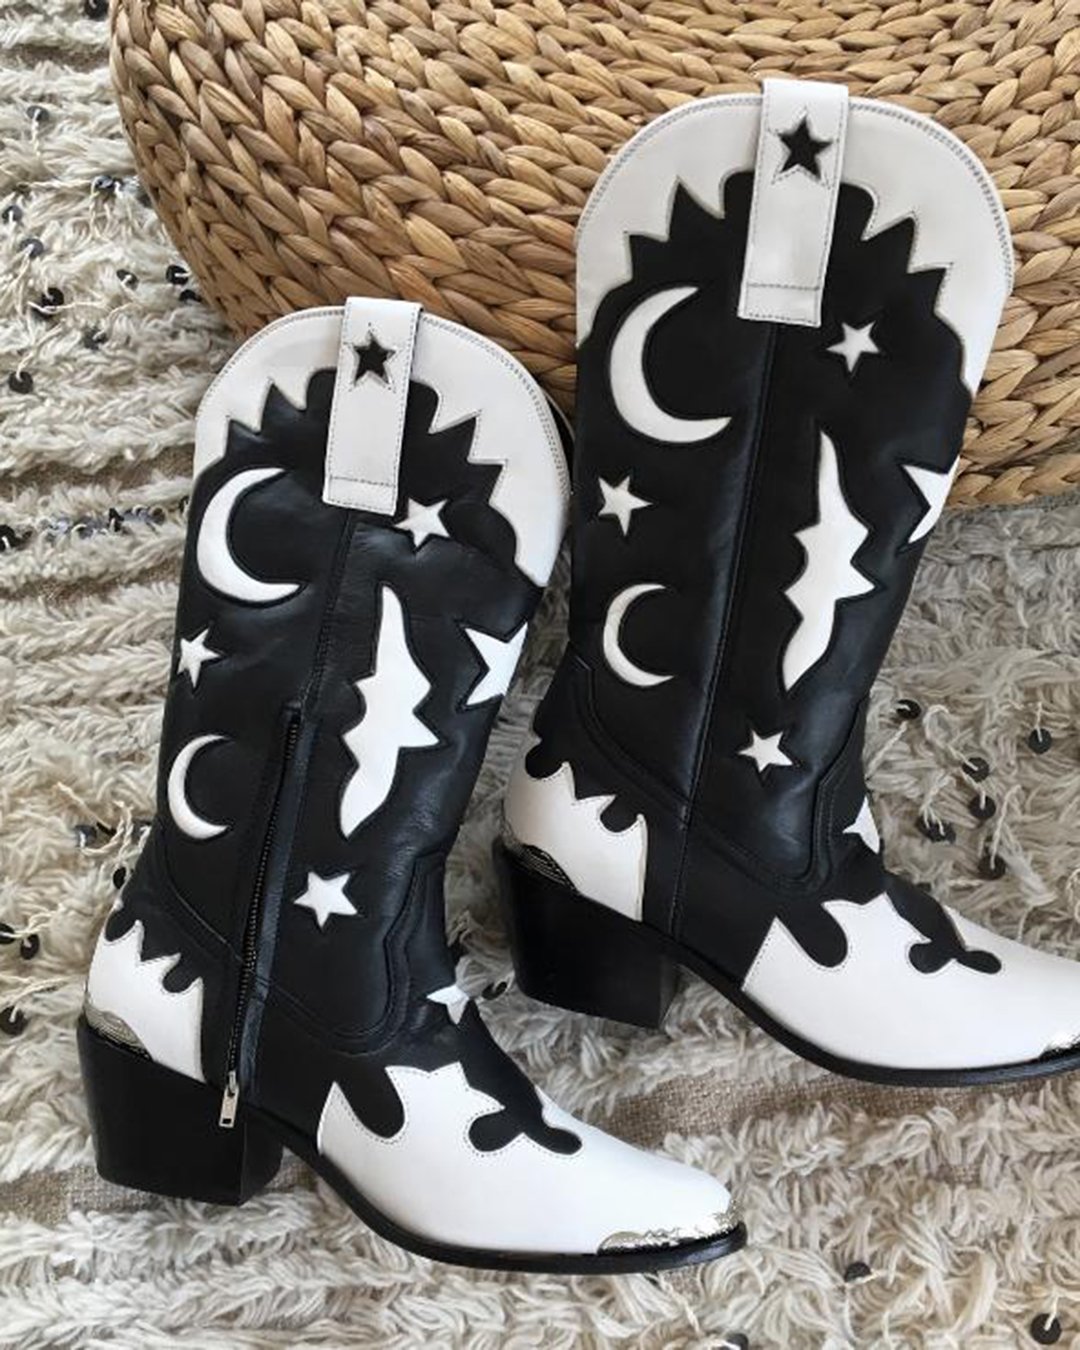 rue de seine wedding dresses cowboy boots black-white for barn